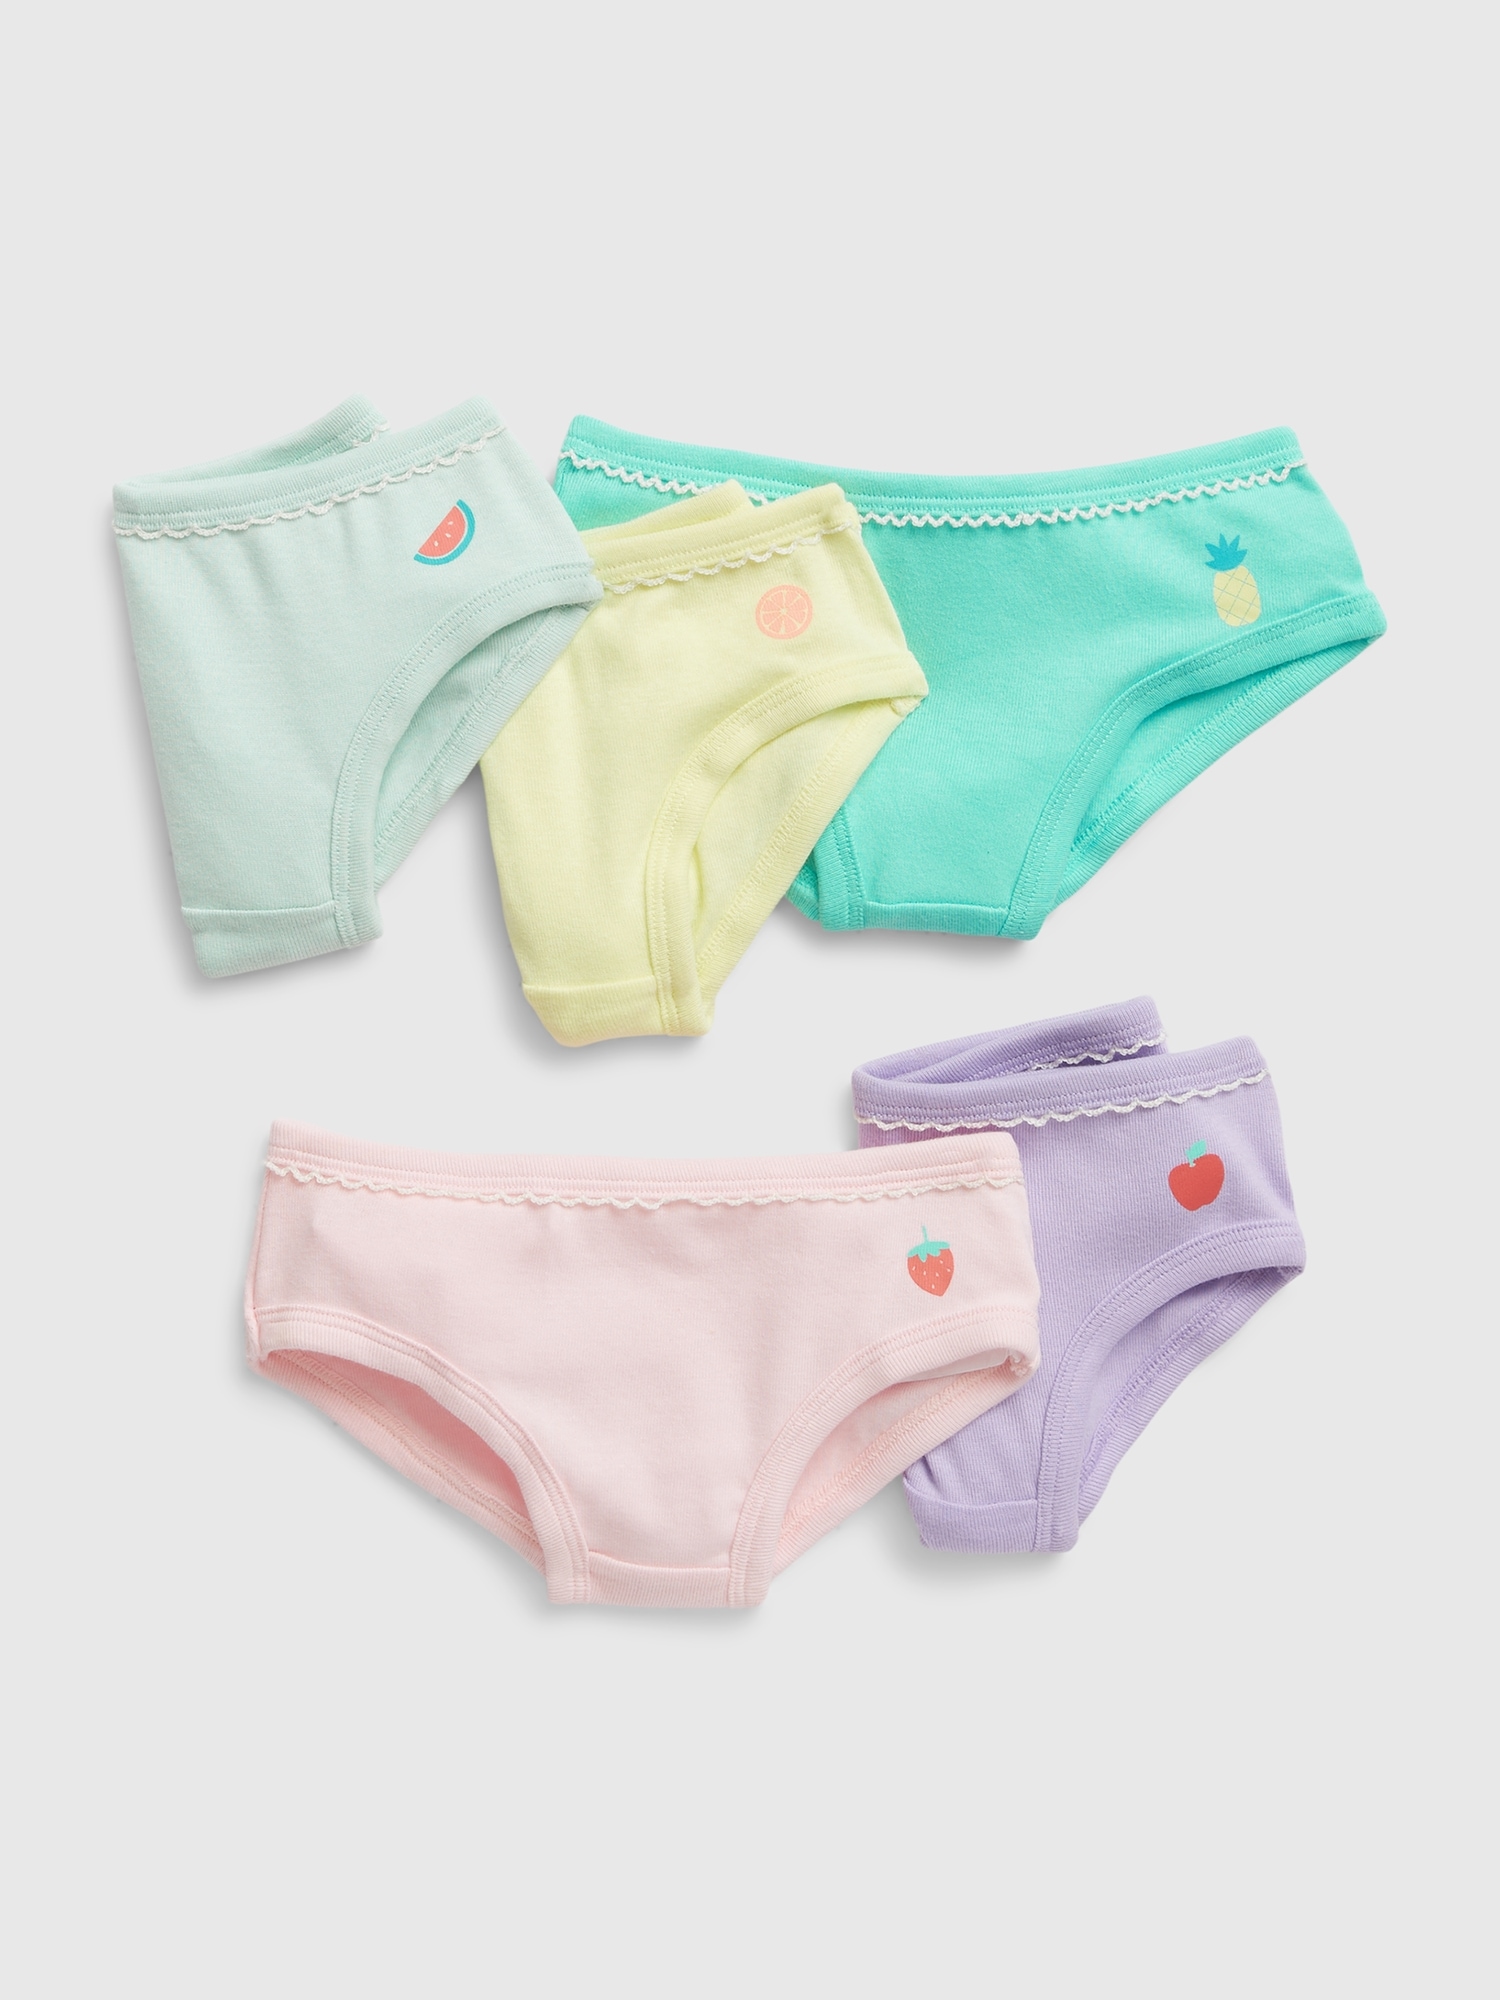 Toddler Underwear Kids Undies Girls Cotton Panties.Carter's Girls